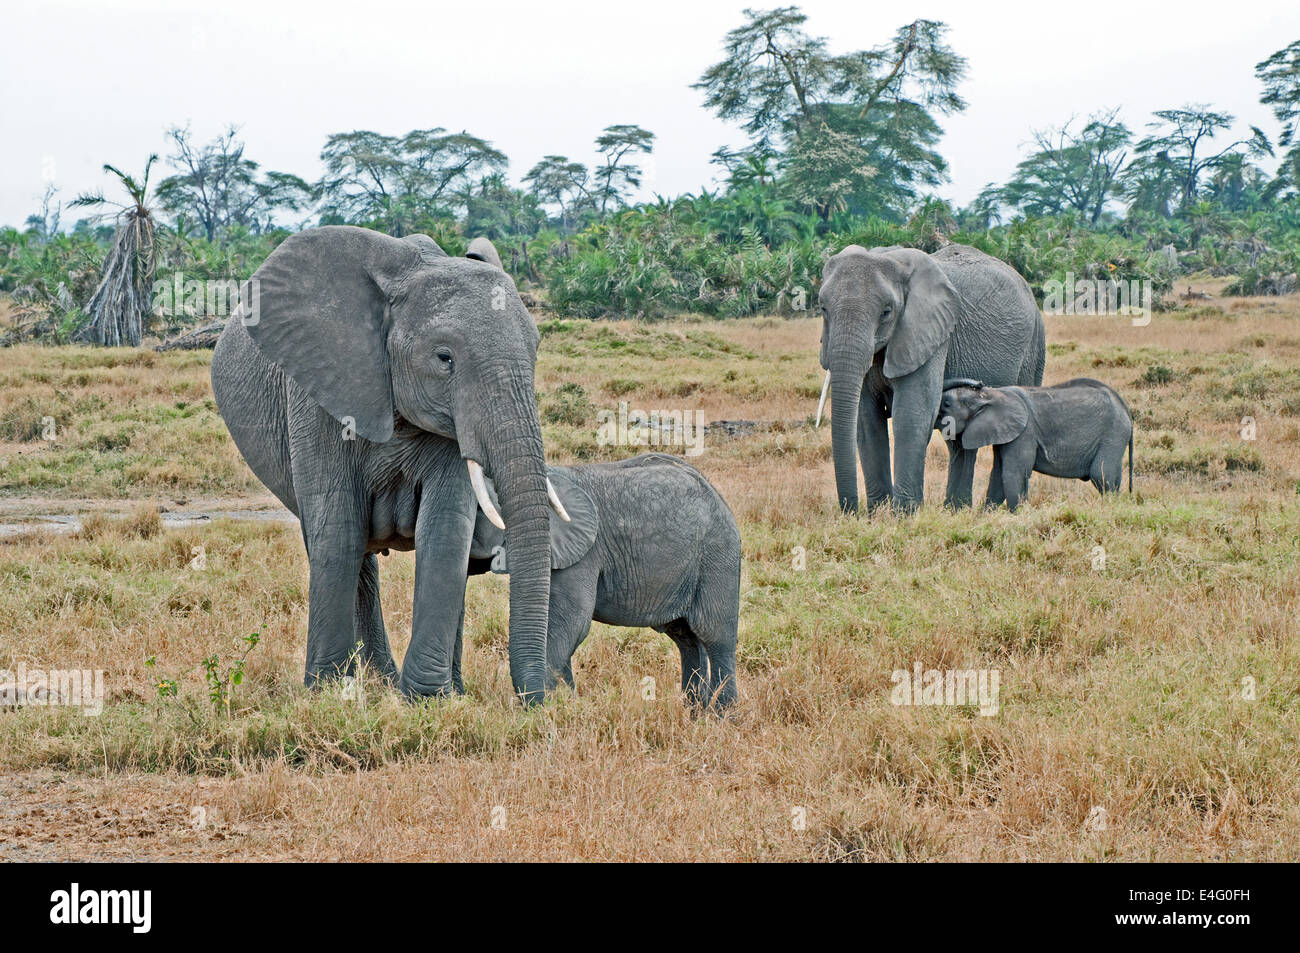 Zwei weibliche afrikanische Elefanten Spanferkel ihr Baby Kälber Amboseli Nationalpark Kenia in Ostafrika Stockfoto